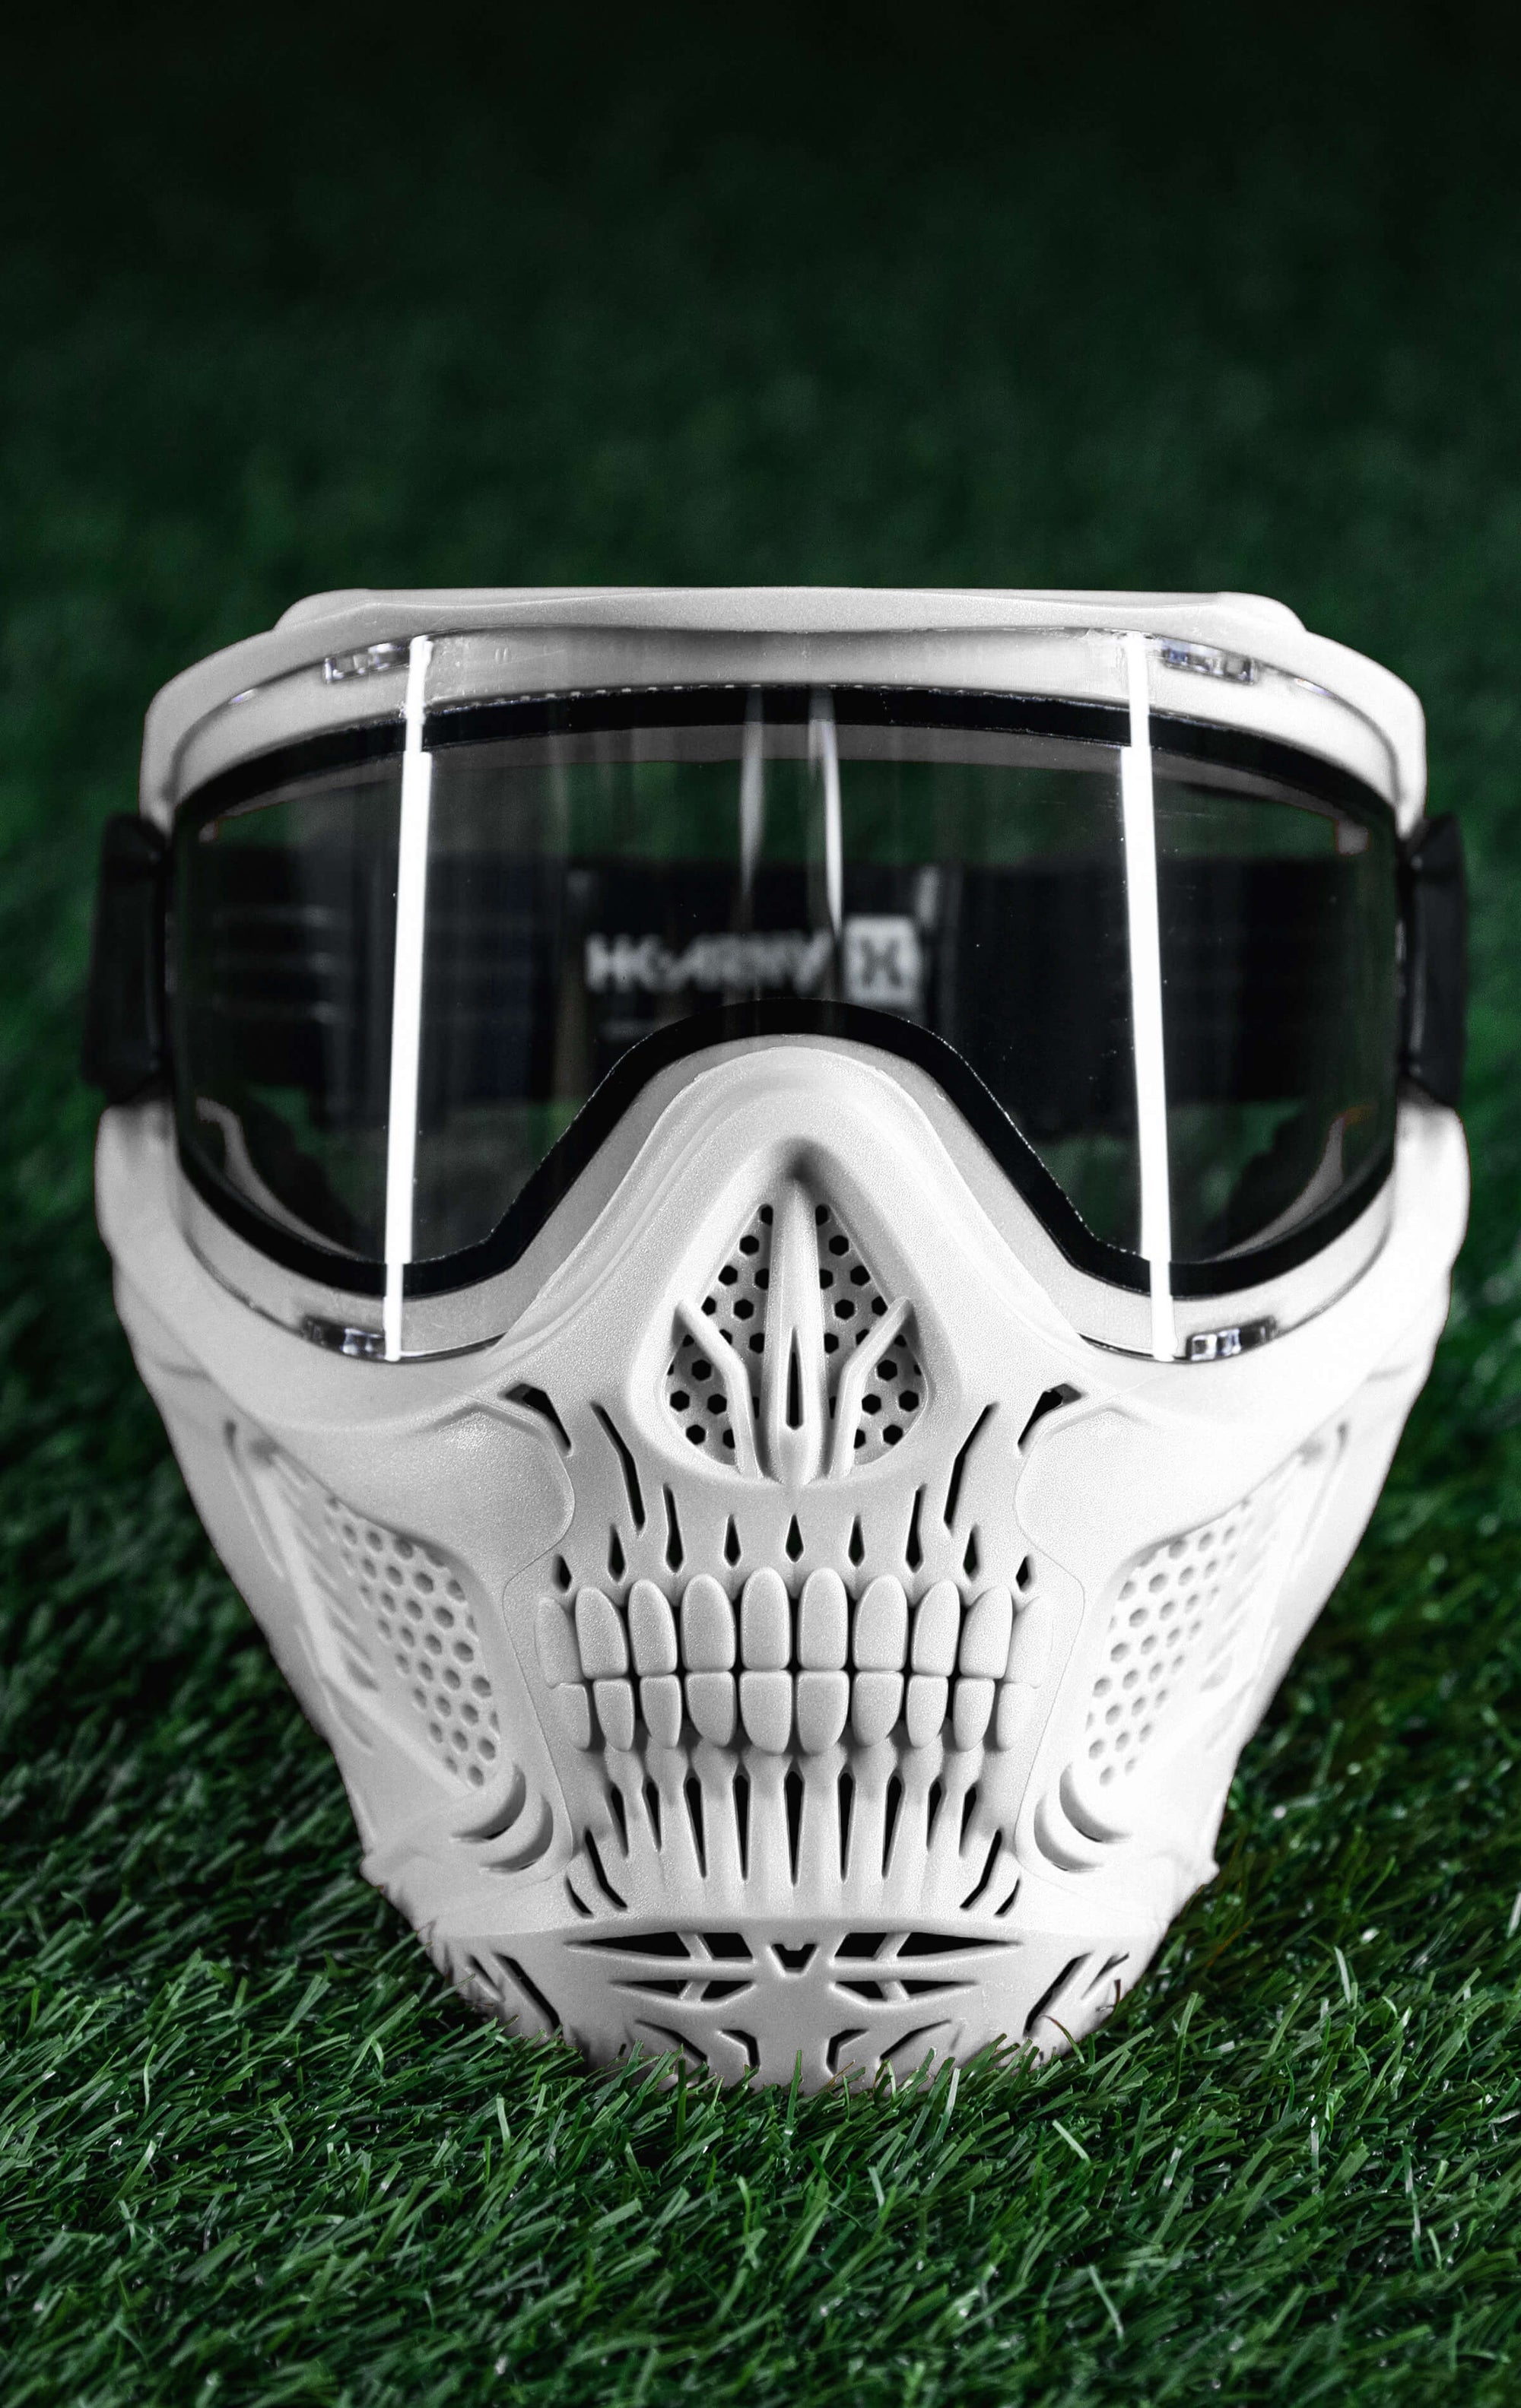 HSTL Skull Goggle - White w/ Clear Lens